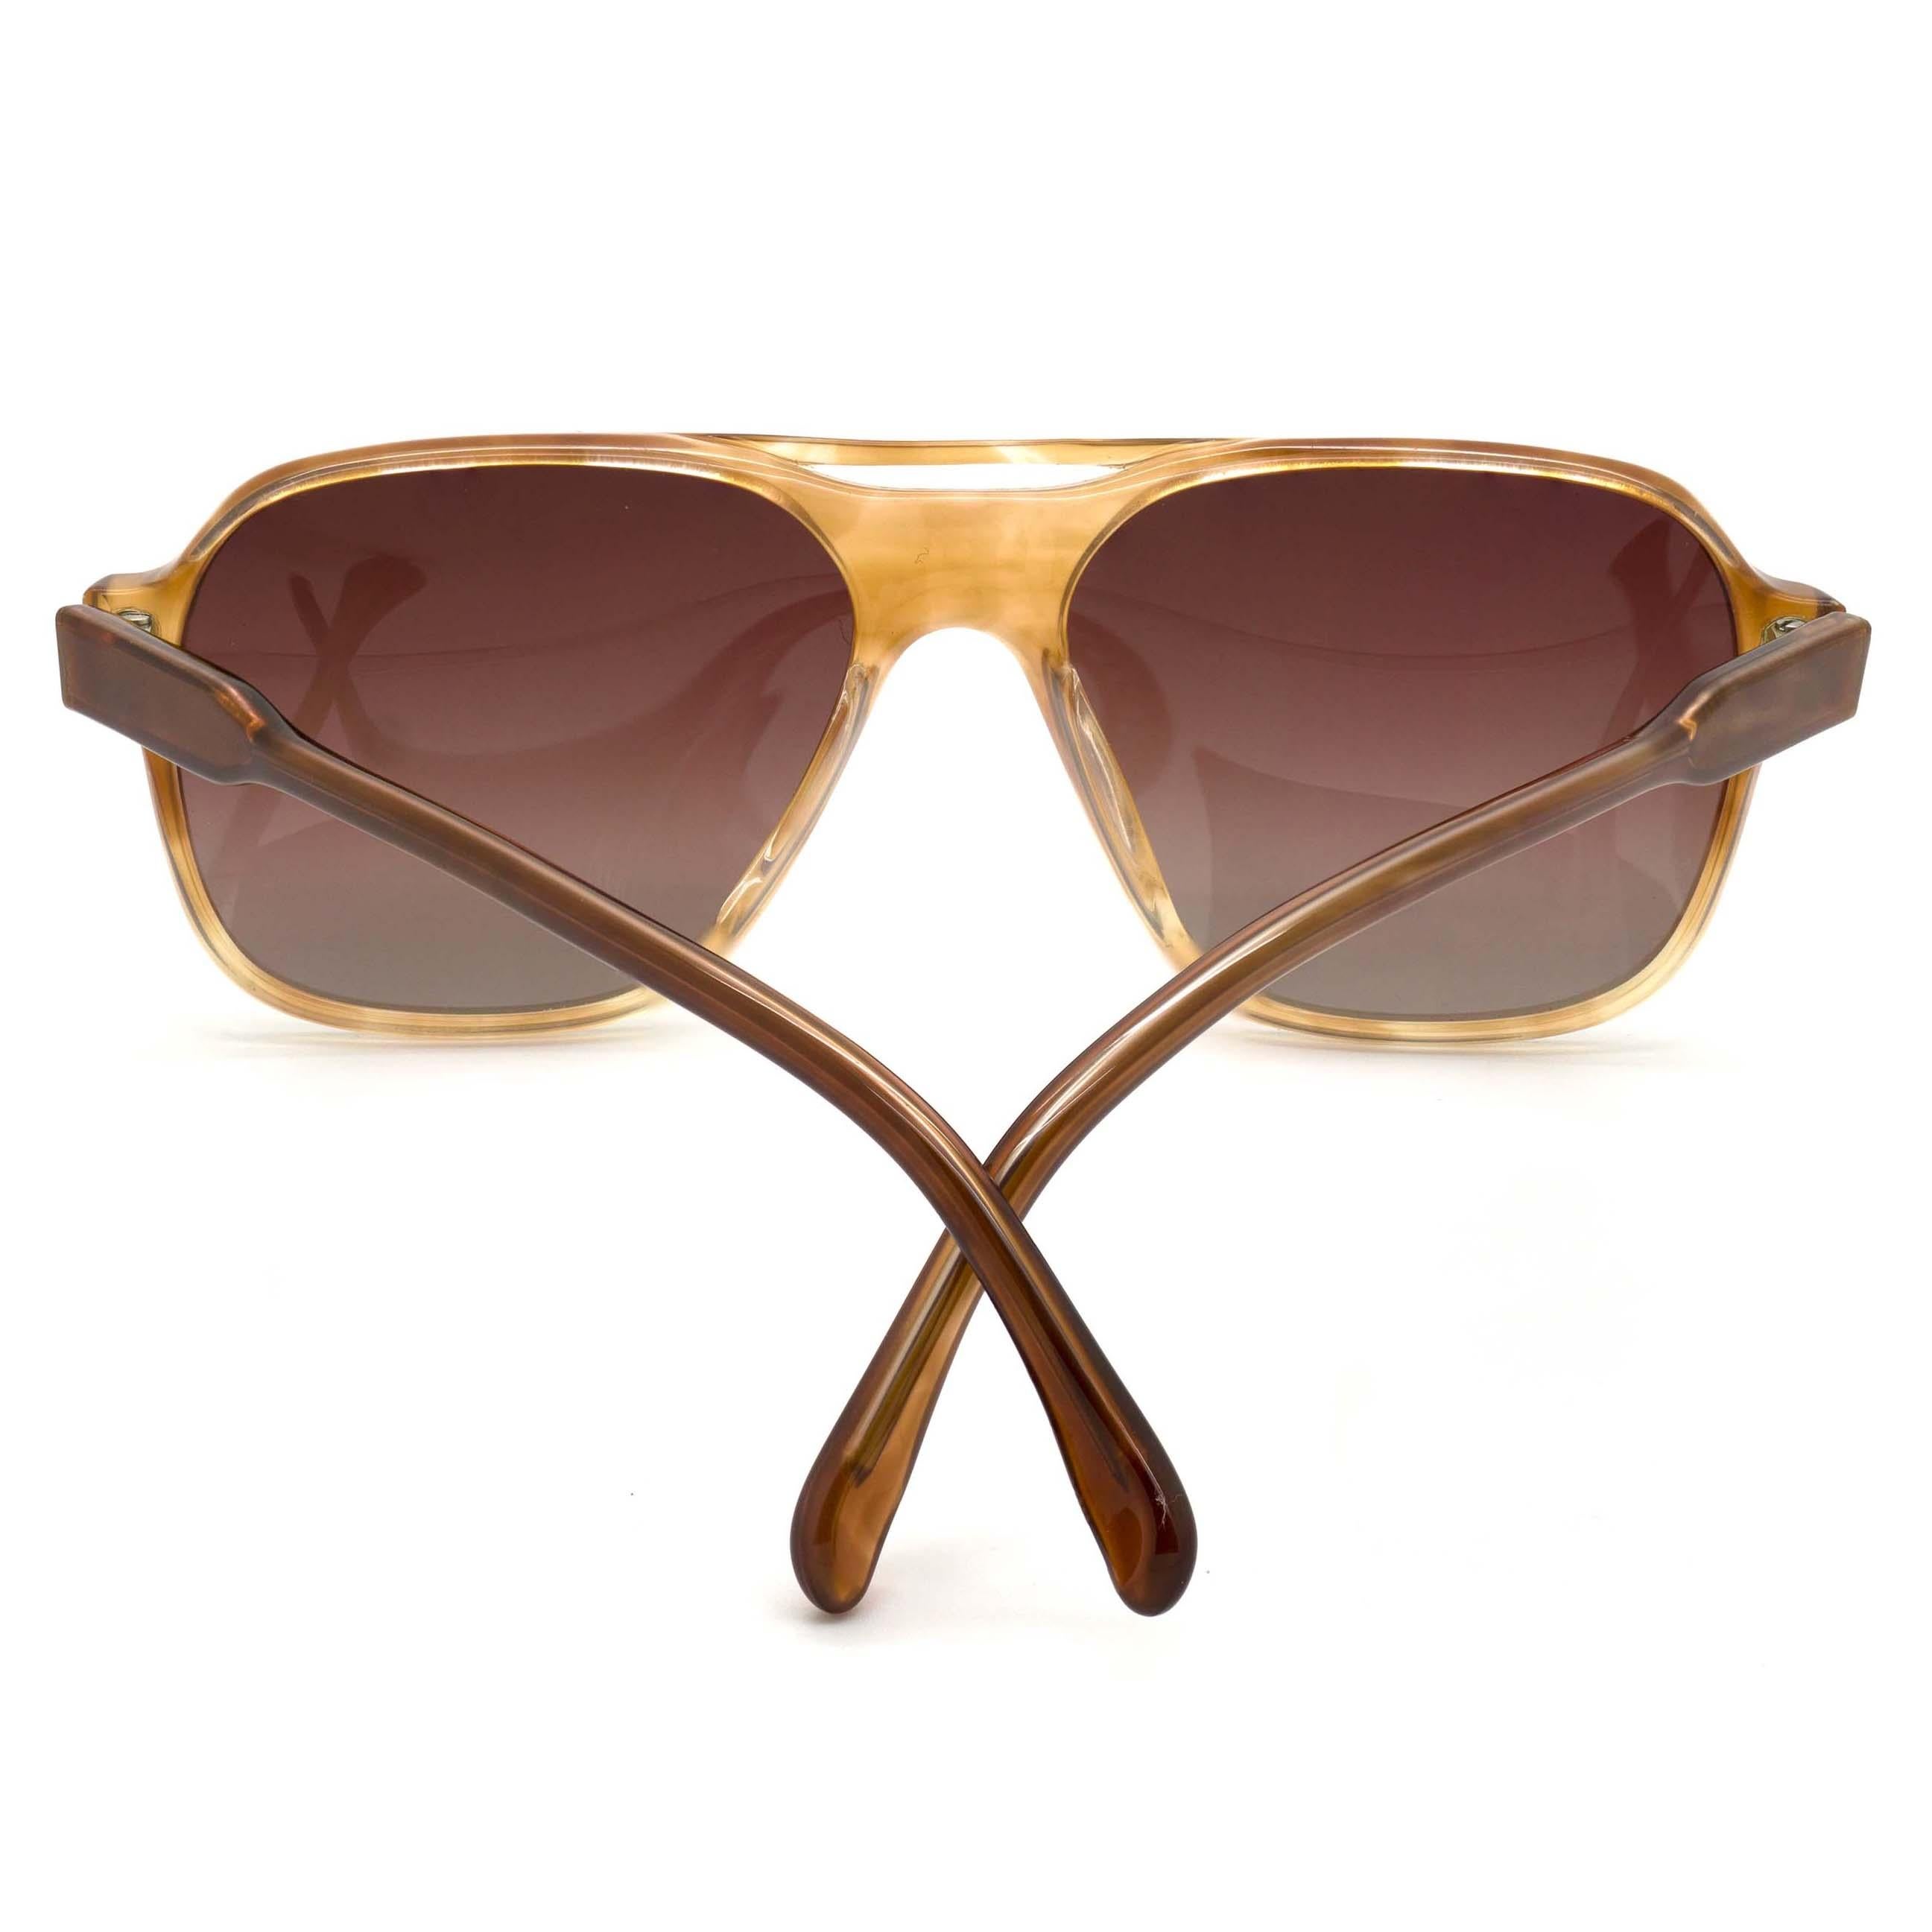 70s square sunglasses